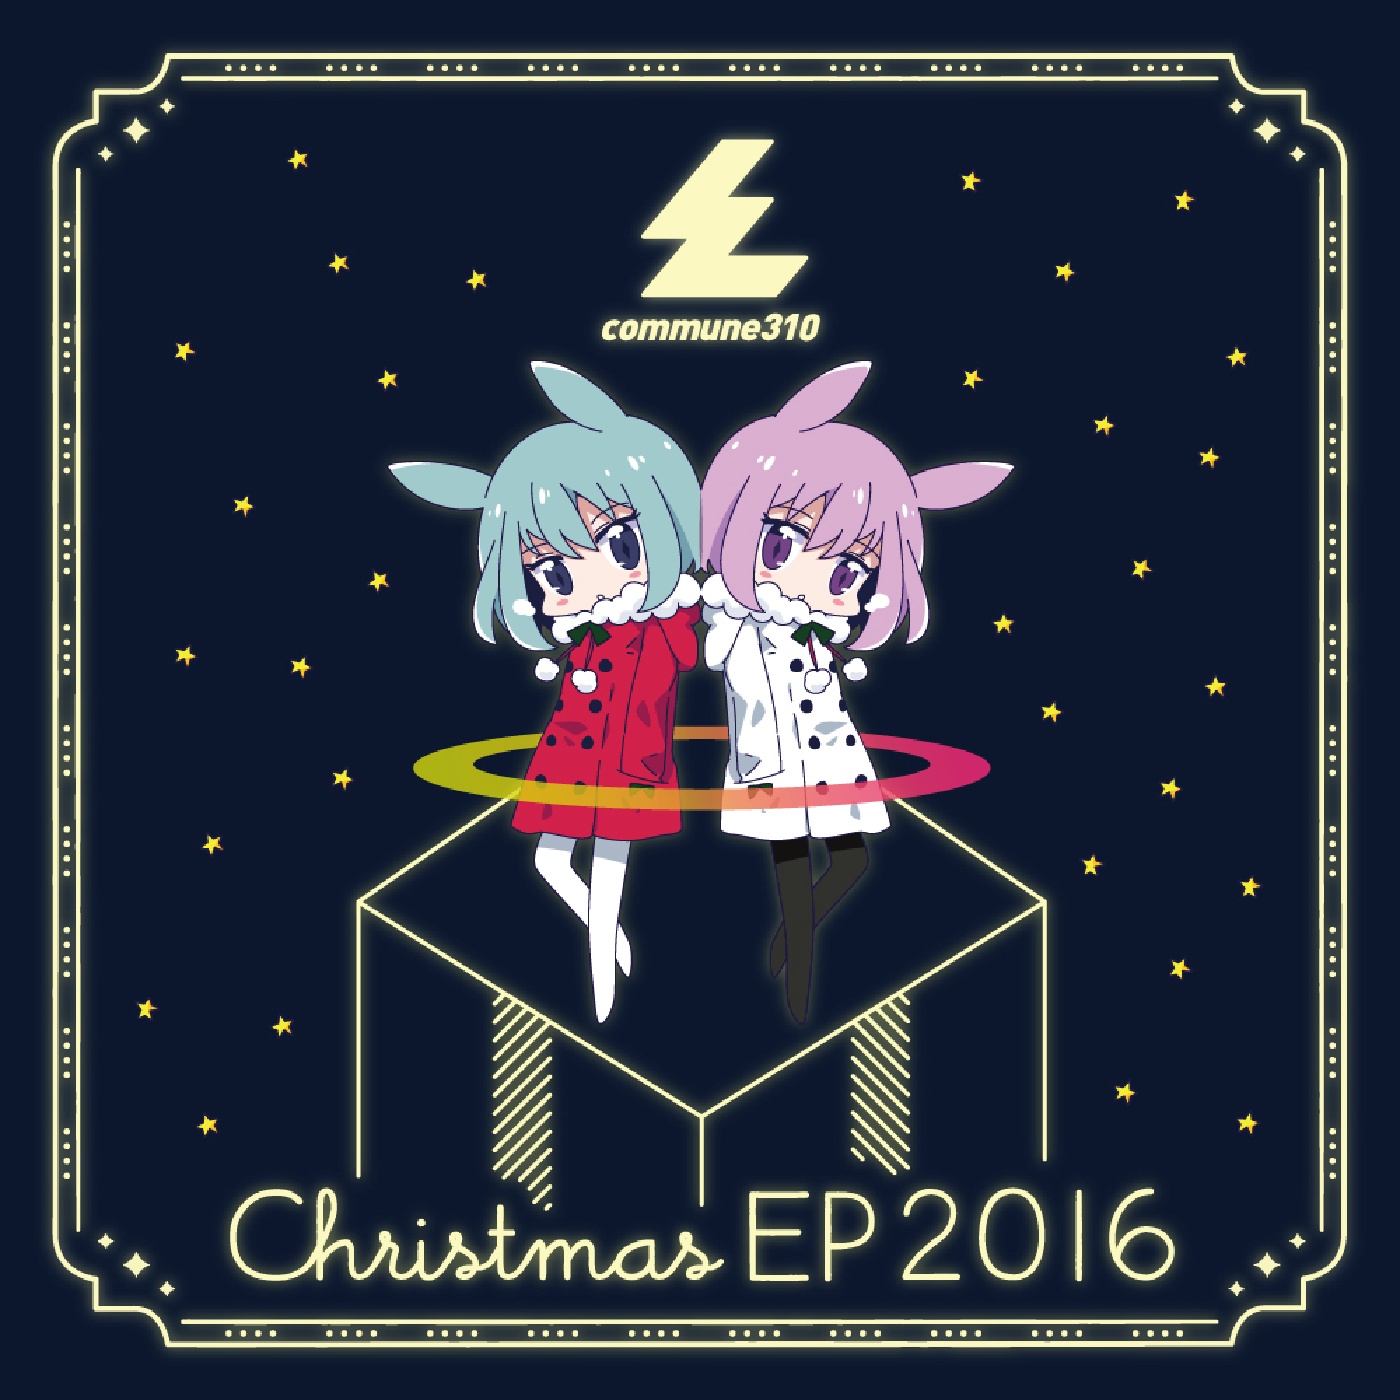 commune310 Christmas EP 2016